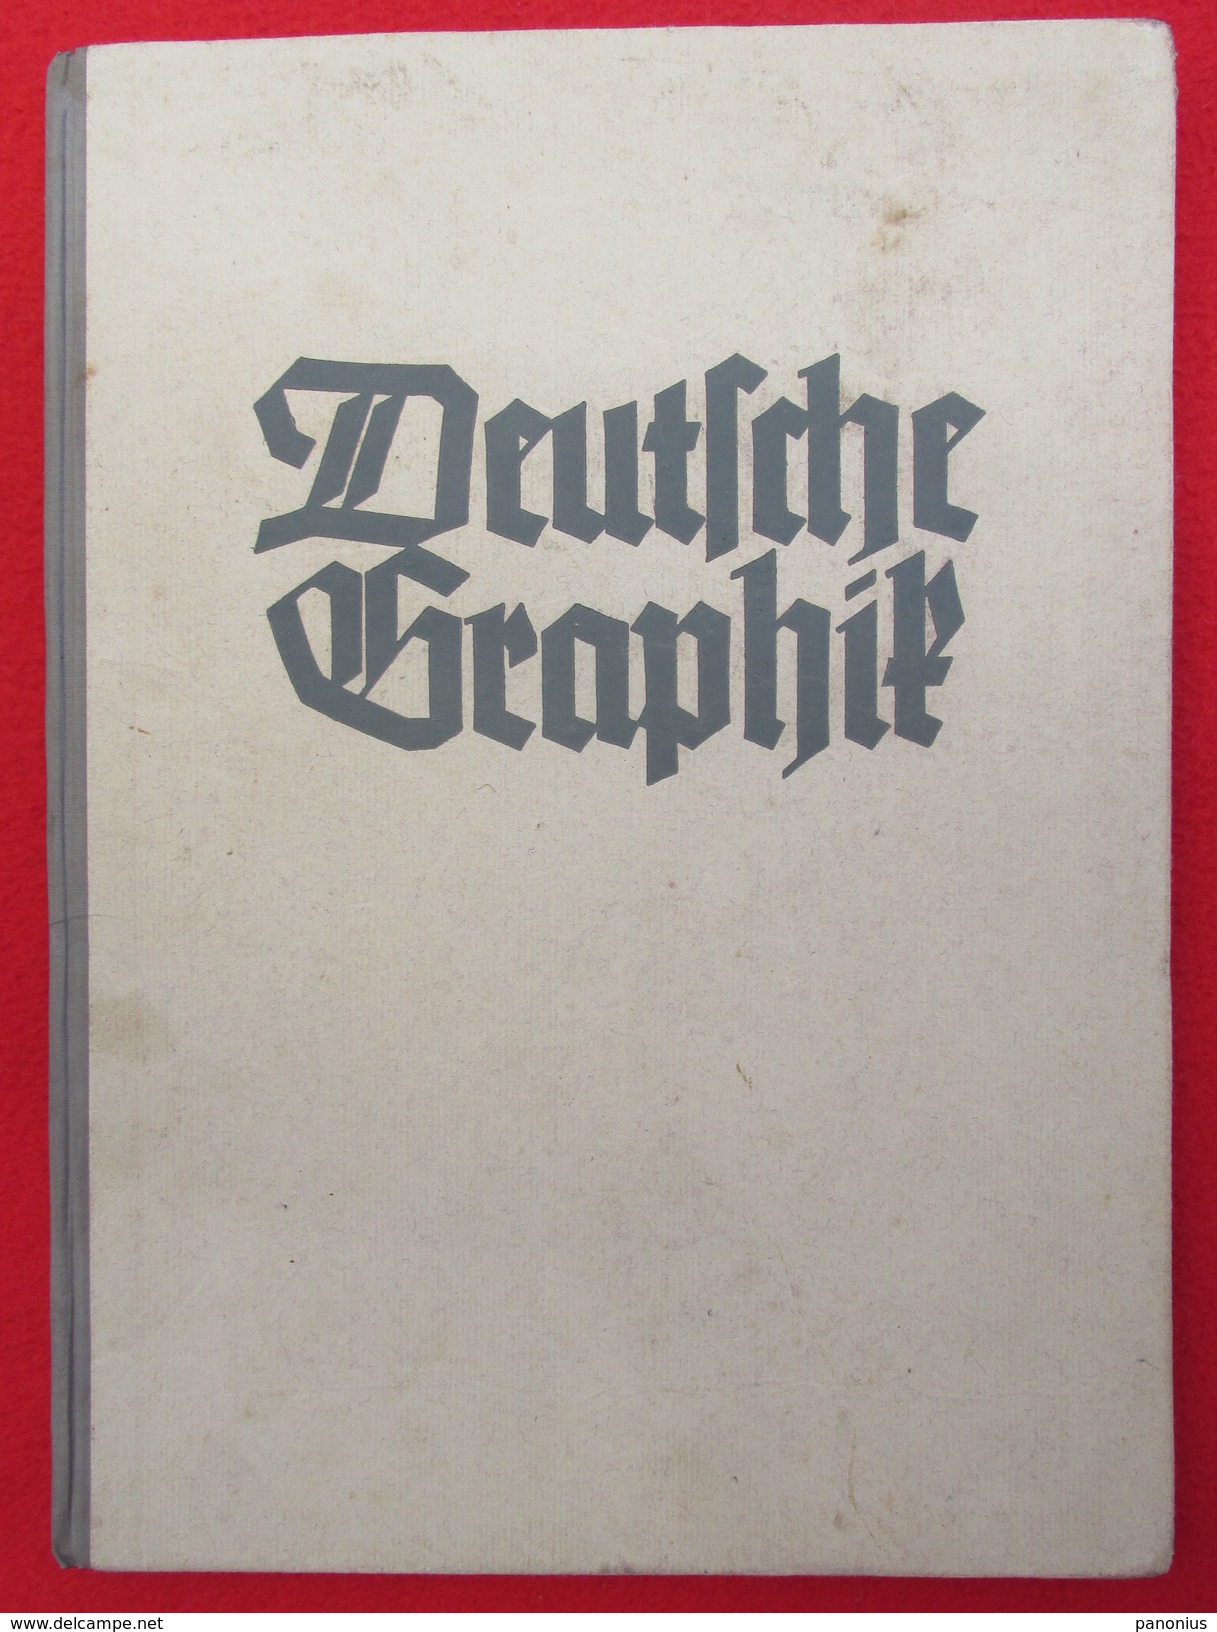 DEUTSCHE GRAPHIK - Art Book, Monograph, Painting, Period III Reich, Berlin, Germany - Graphism & Design